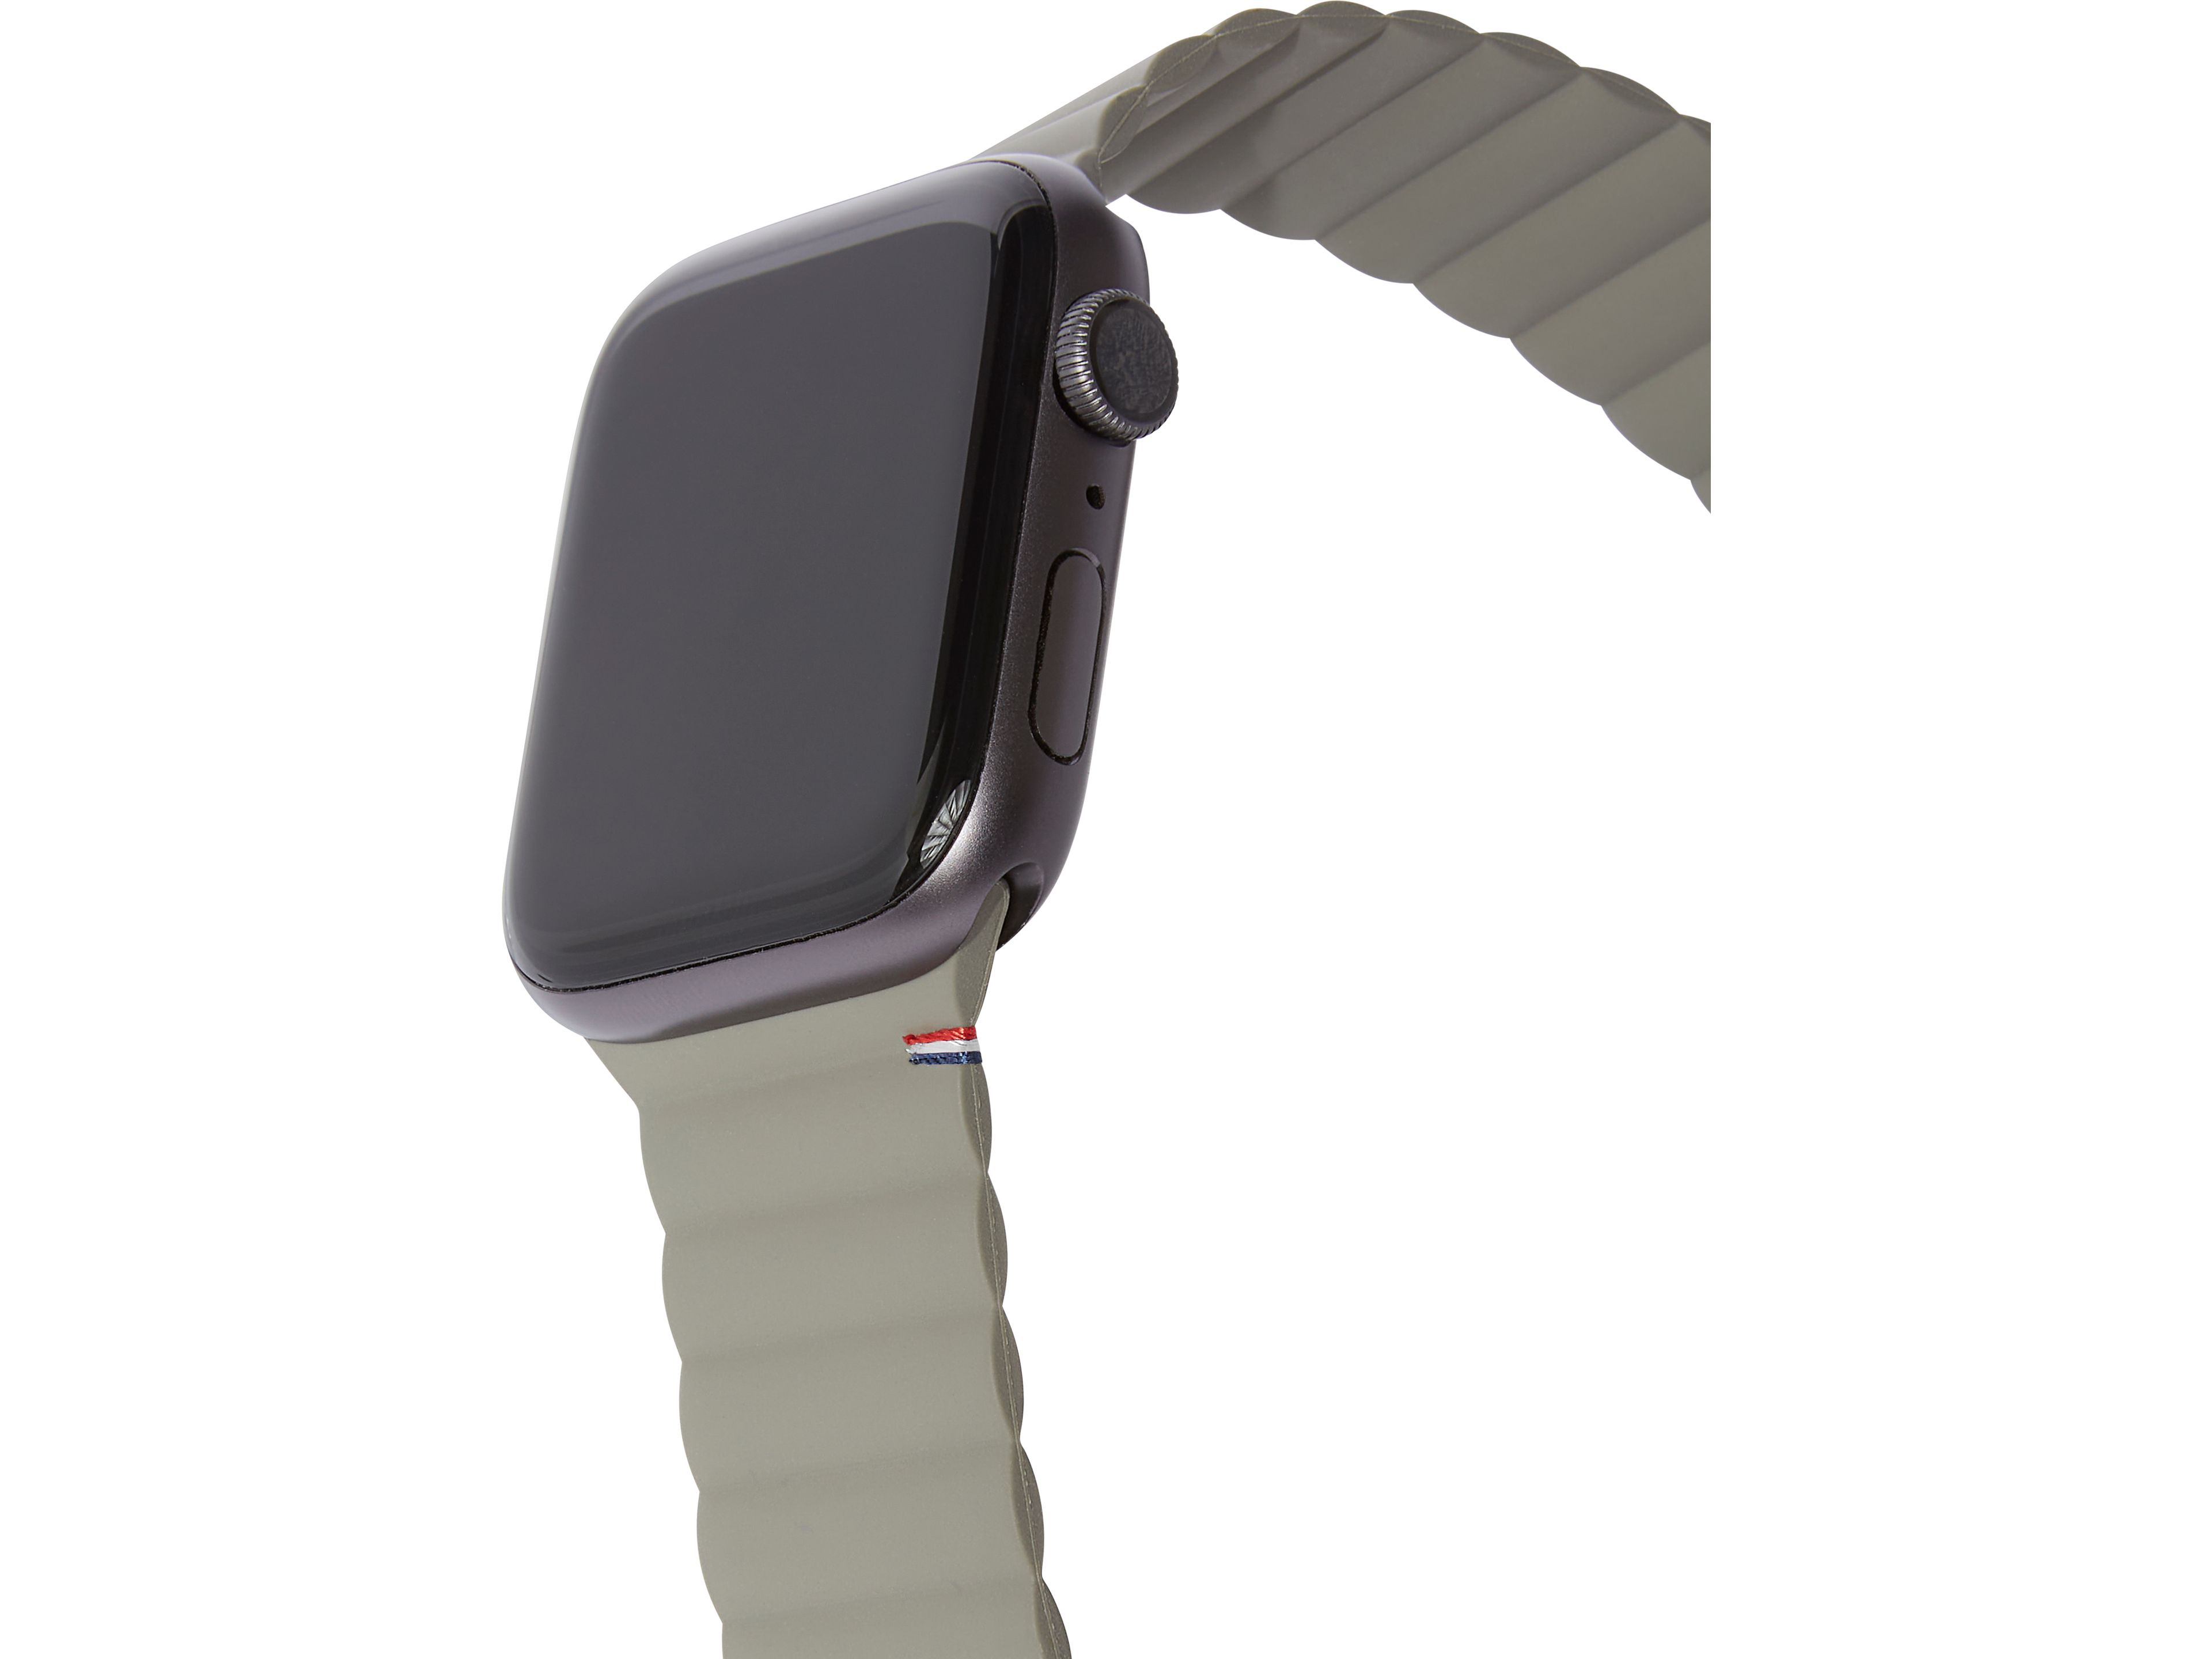 lederarmband-fur-apple-watch-3844-cm-var-3